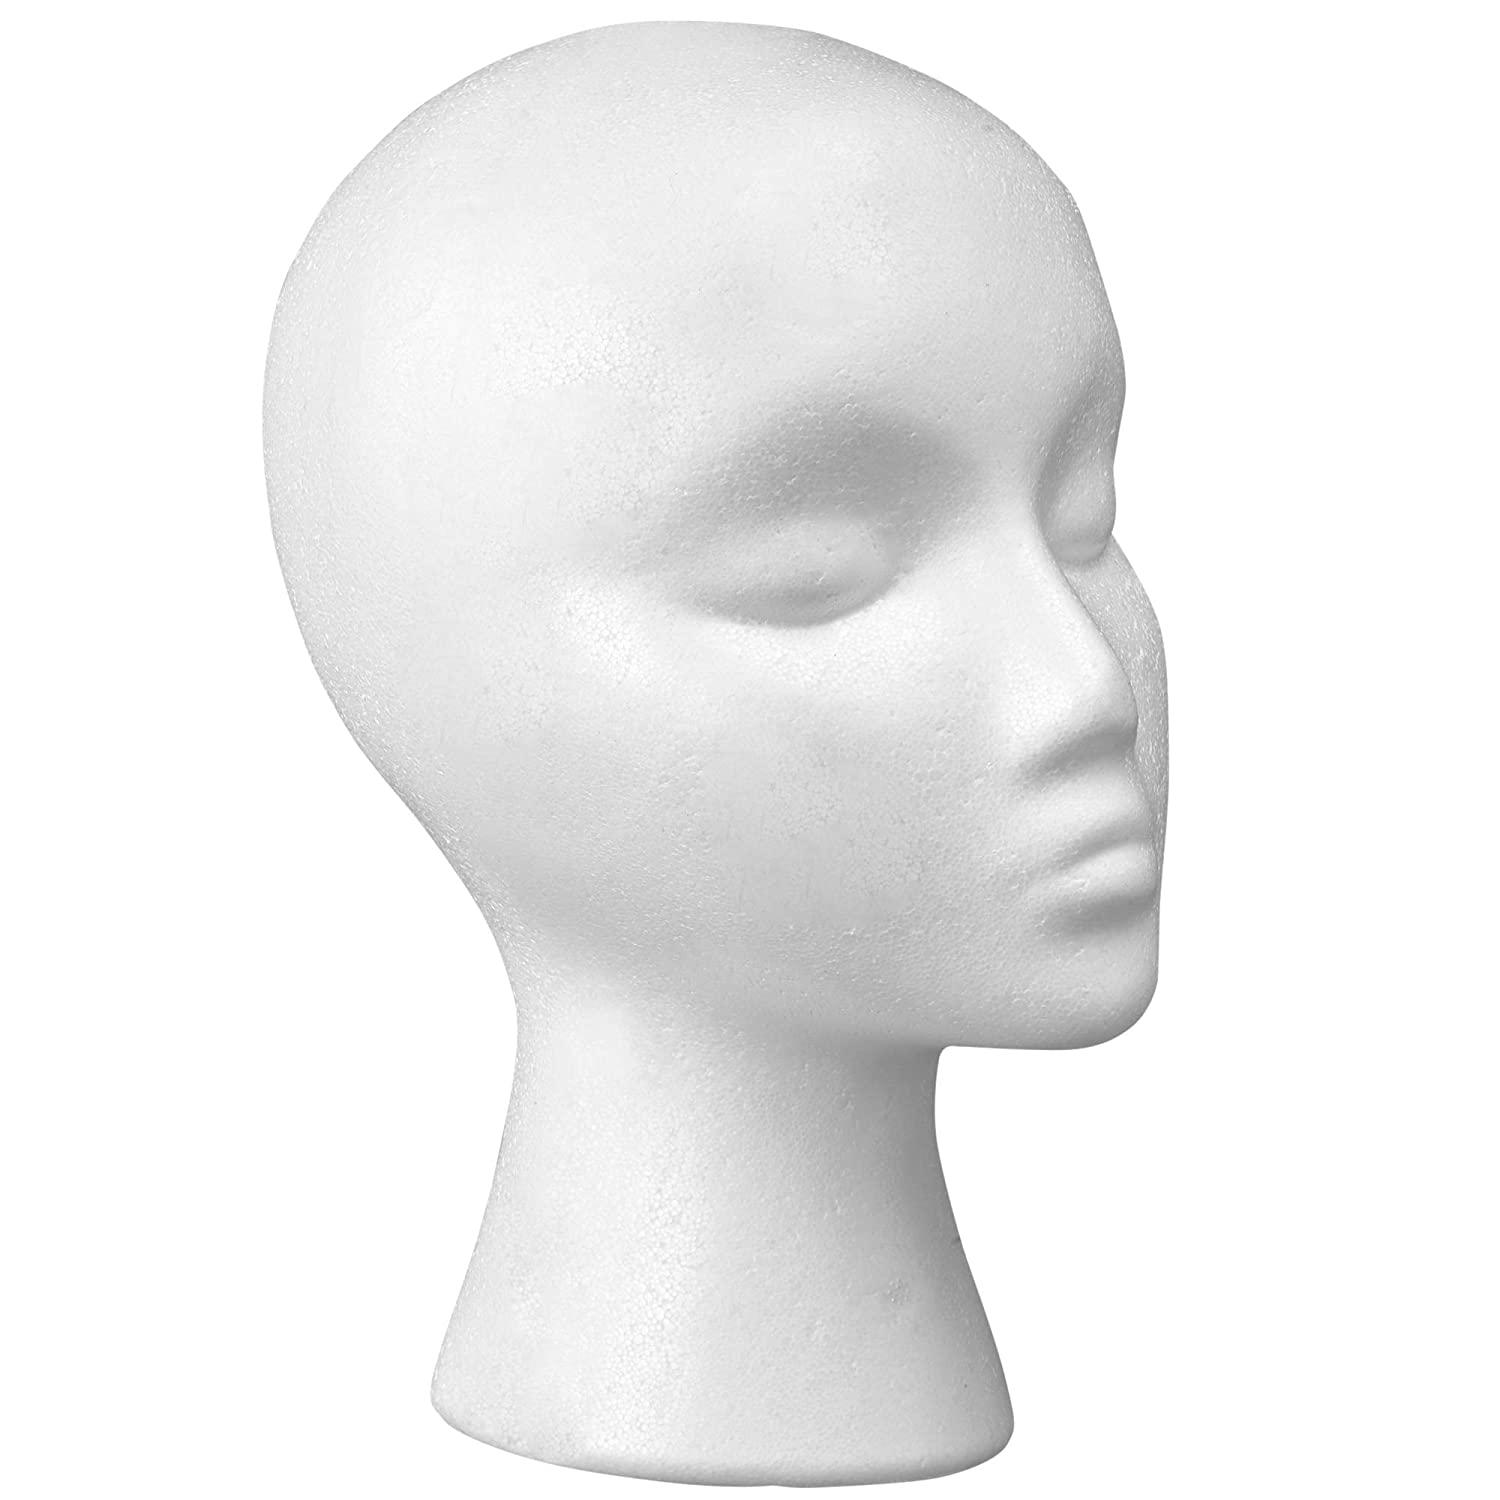  Giell Styrofoam Mannequin Wig Head Non-Topple Styling